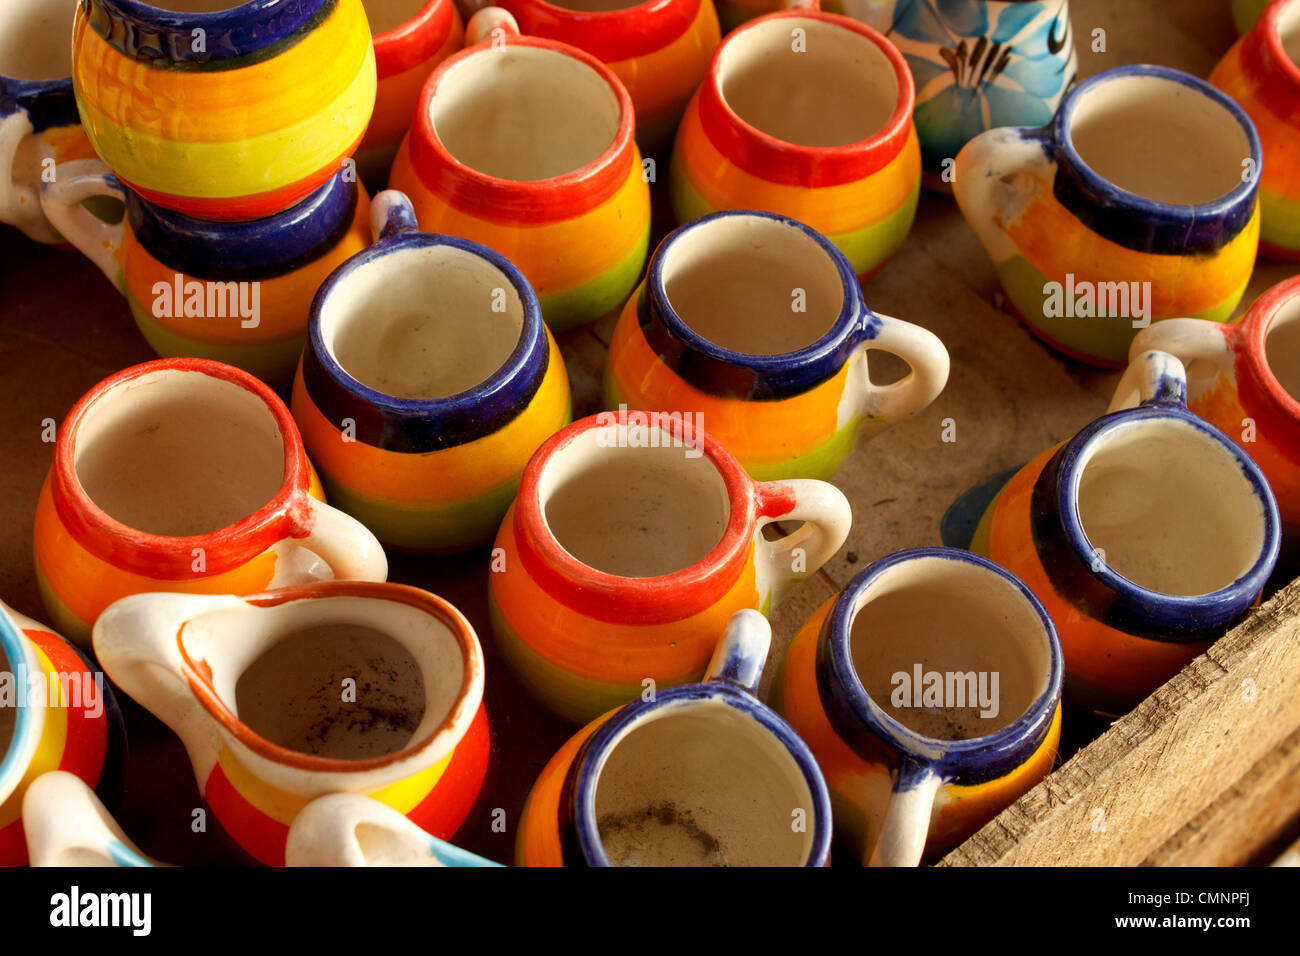 https://c8.alamy.com/comp/CMNPFJ/variety-of-colorful-handmade-ceramic-pots-at-outdoor-market-in-mexico-CMNPFJ.jpg